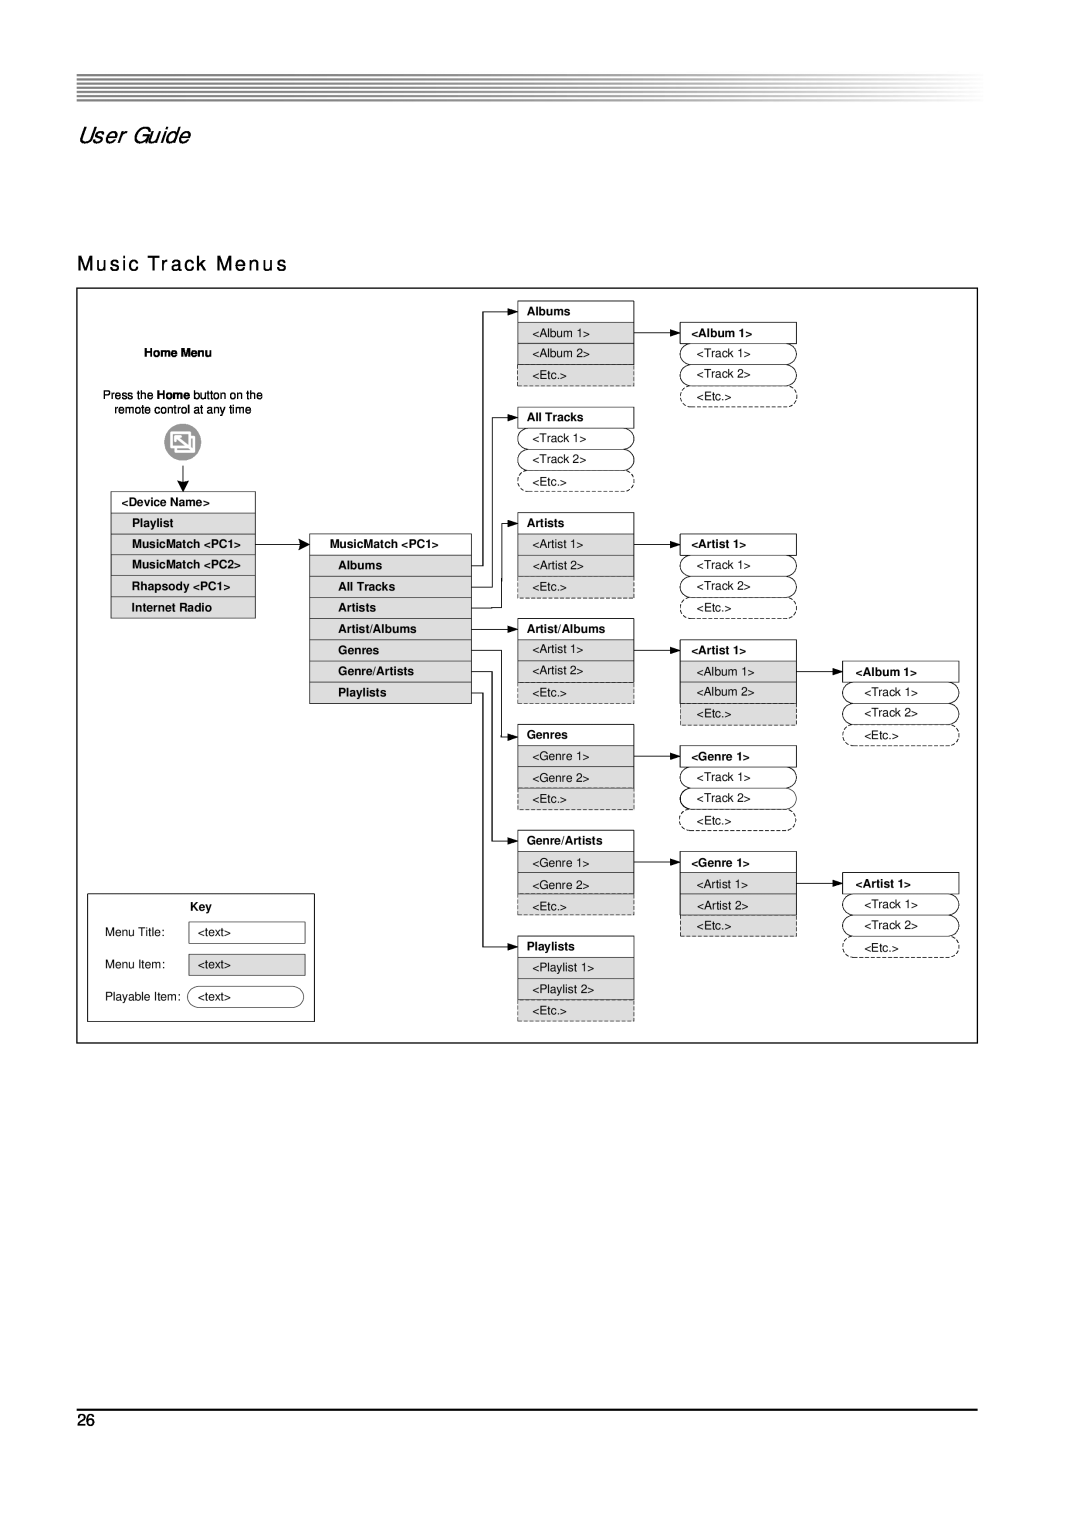 SMC Networks 802.11g manual User Guide, Music Track Menus 